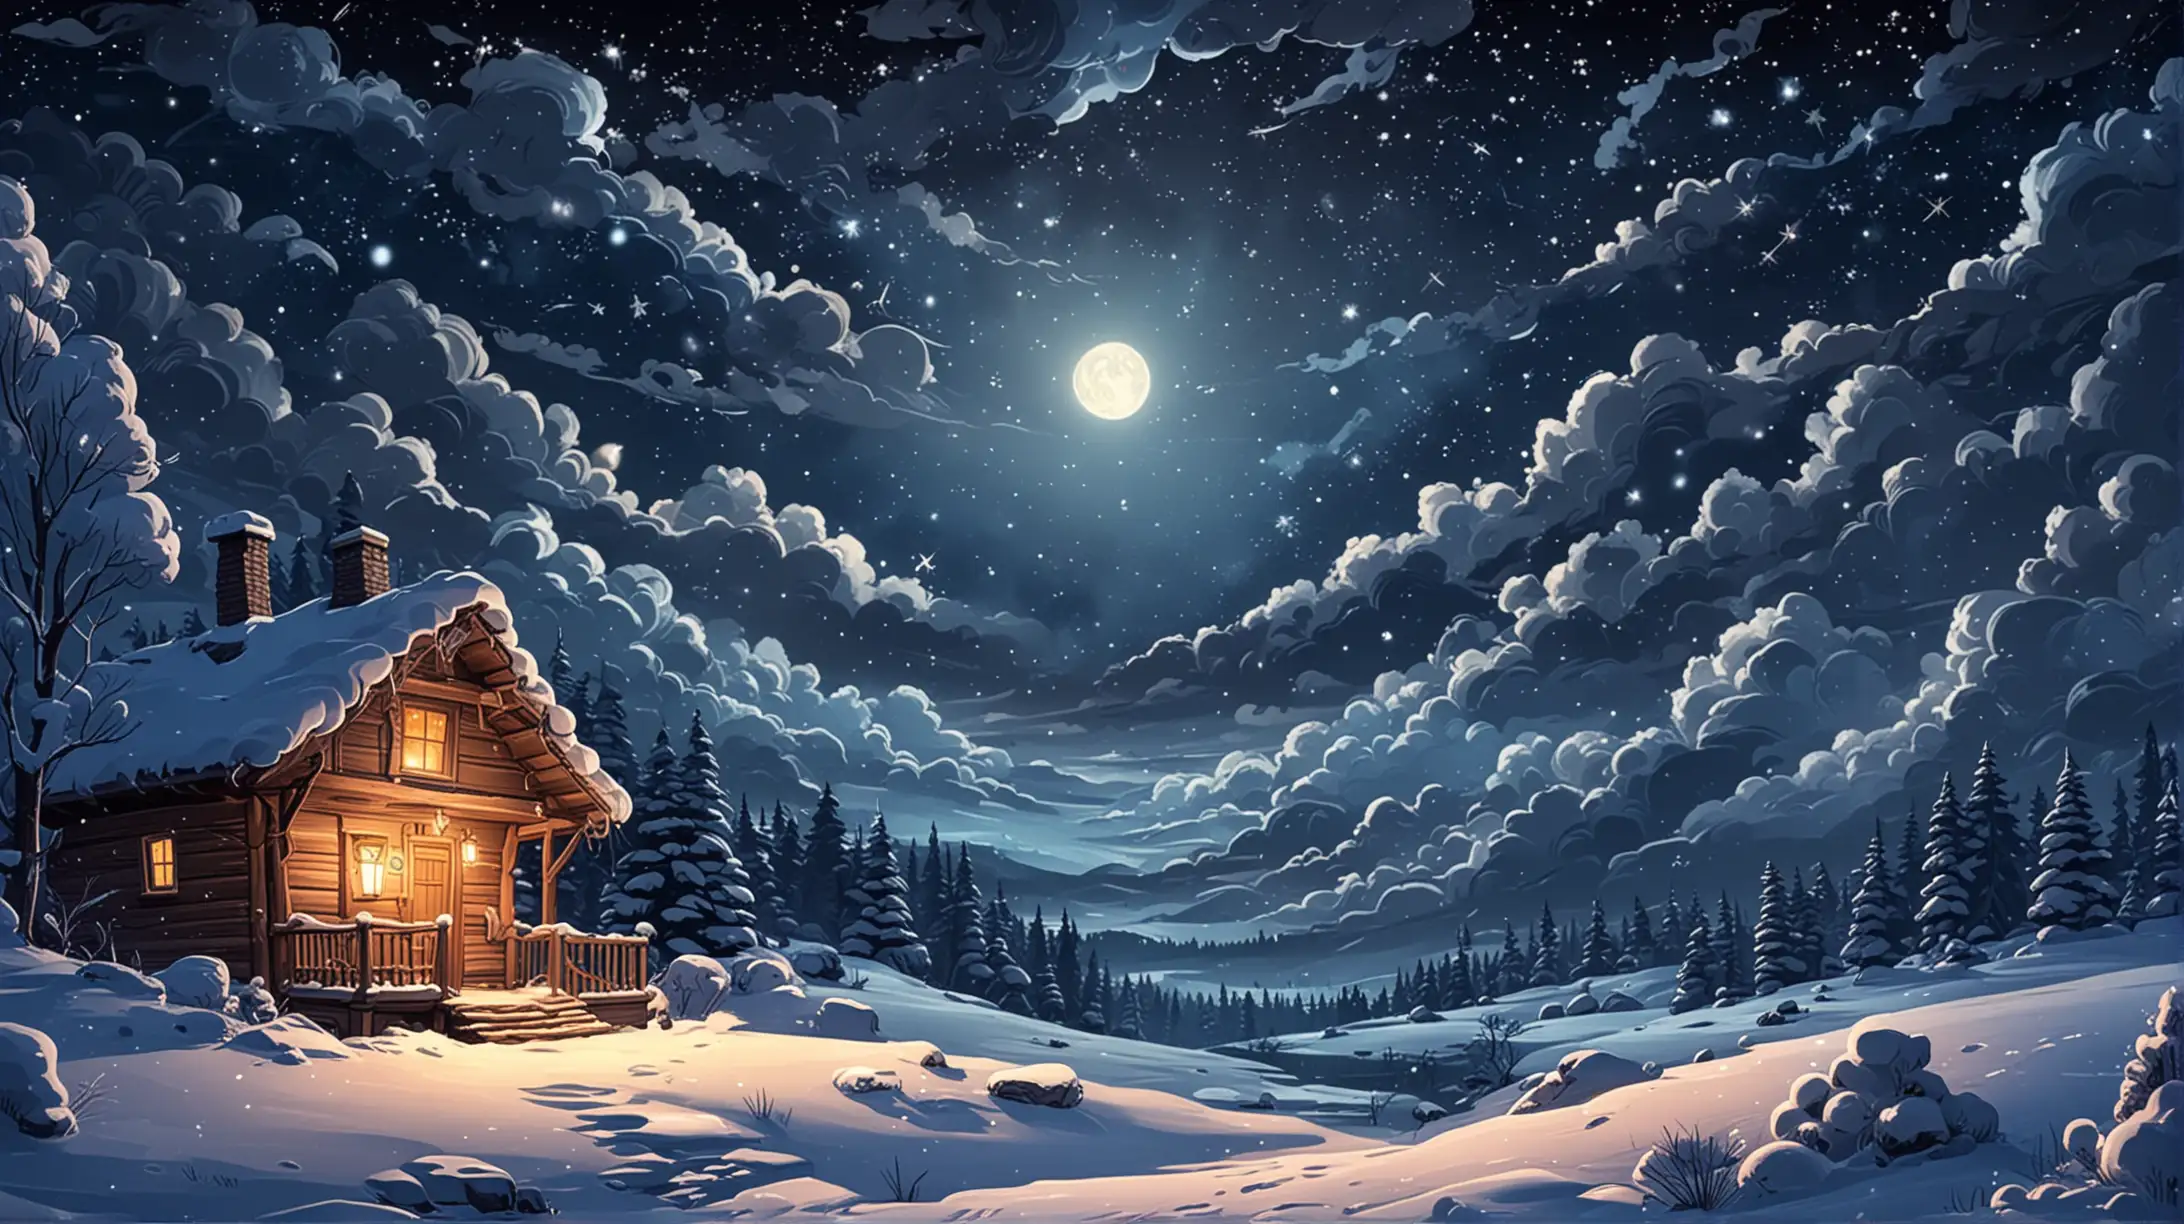 Cartoon Winter Night Sky with Snowy Trees and Starry Sky